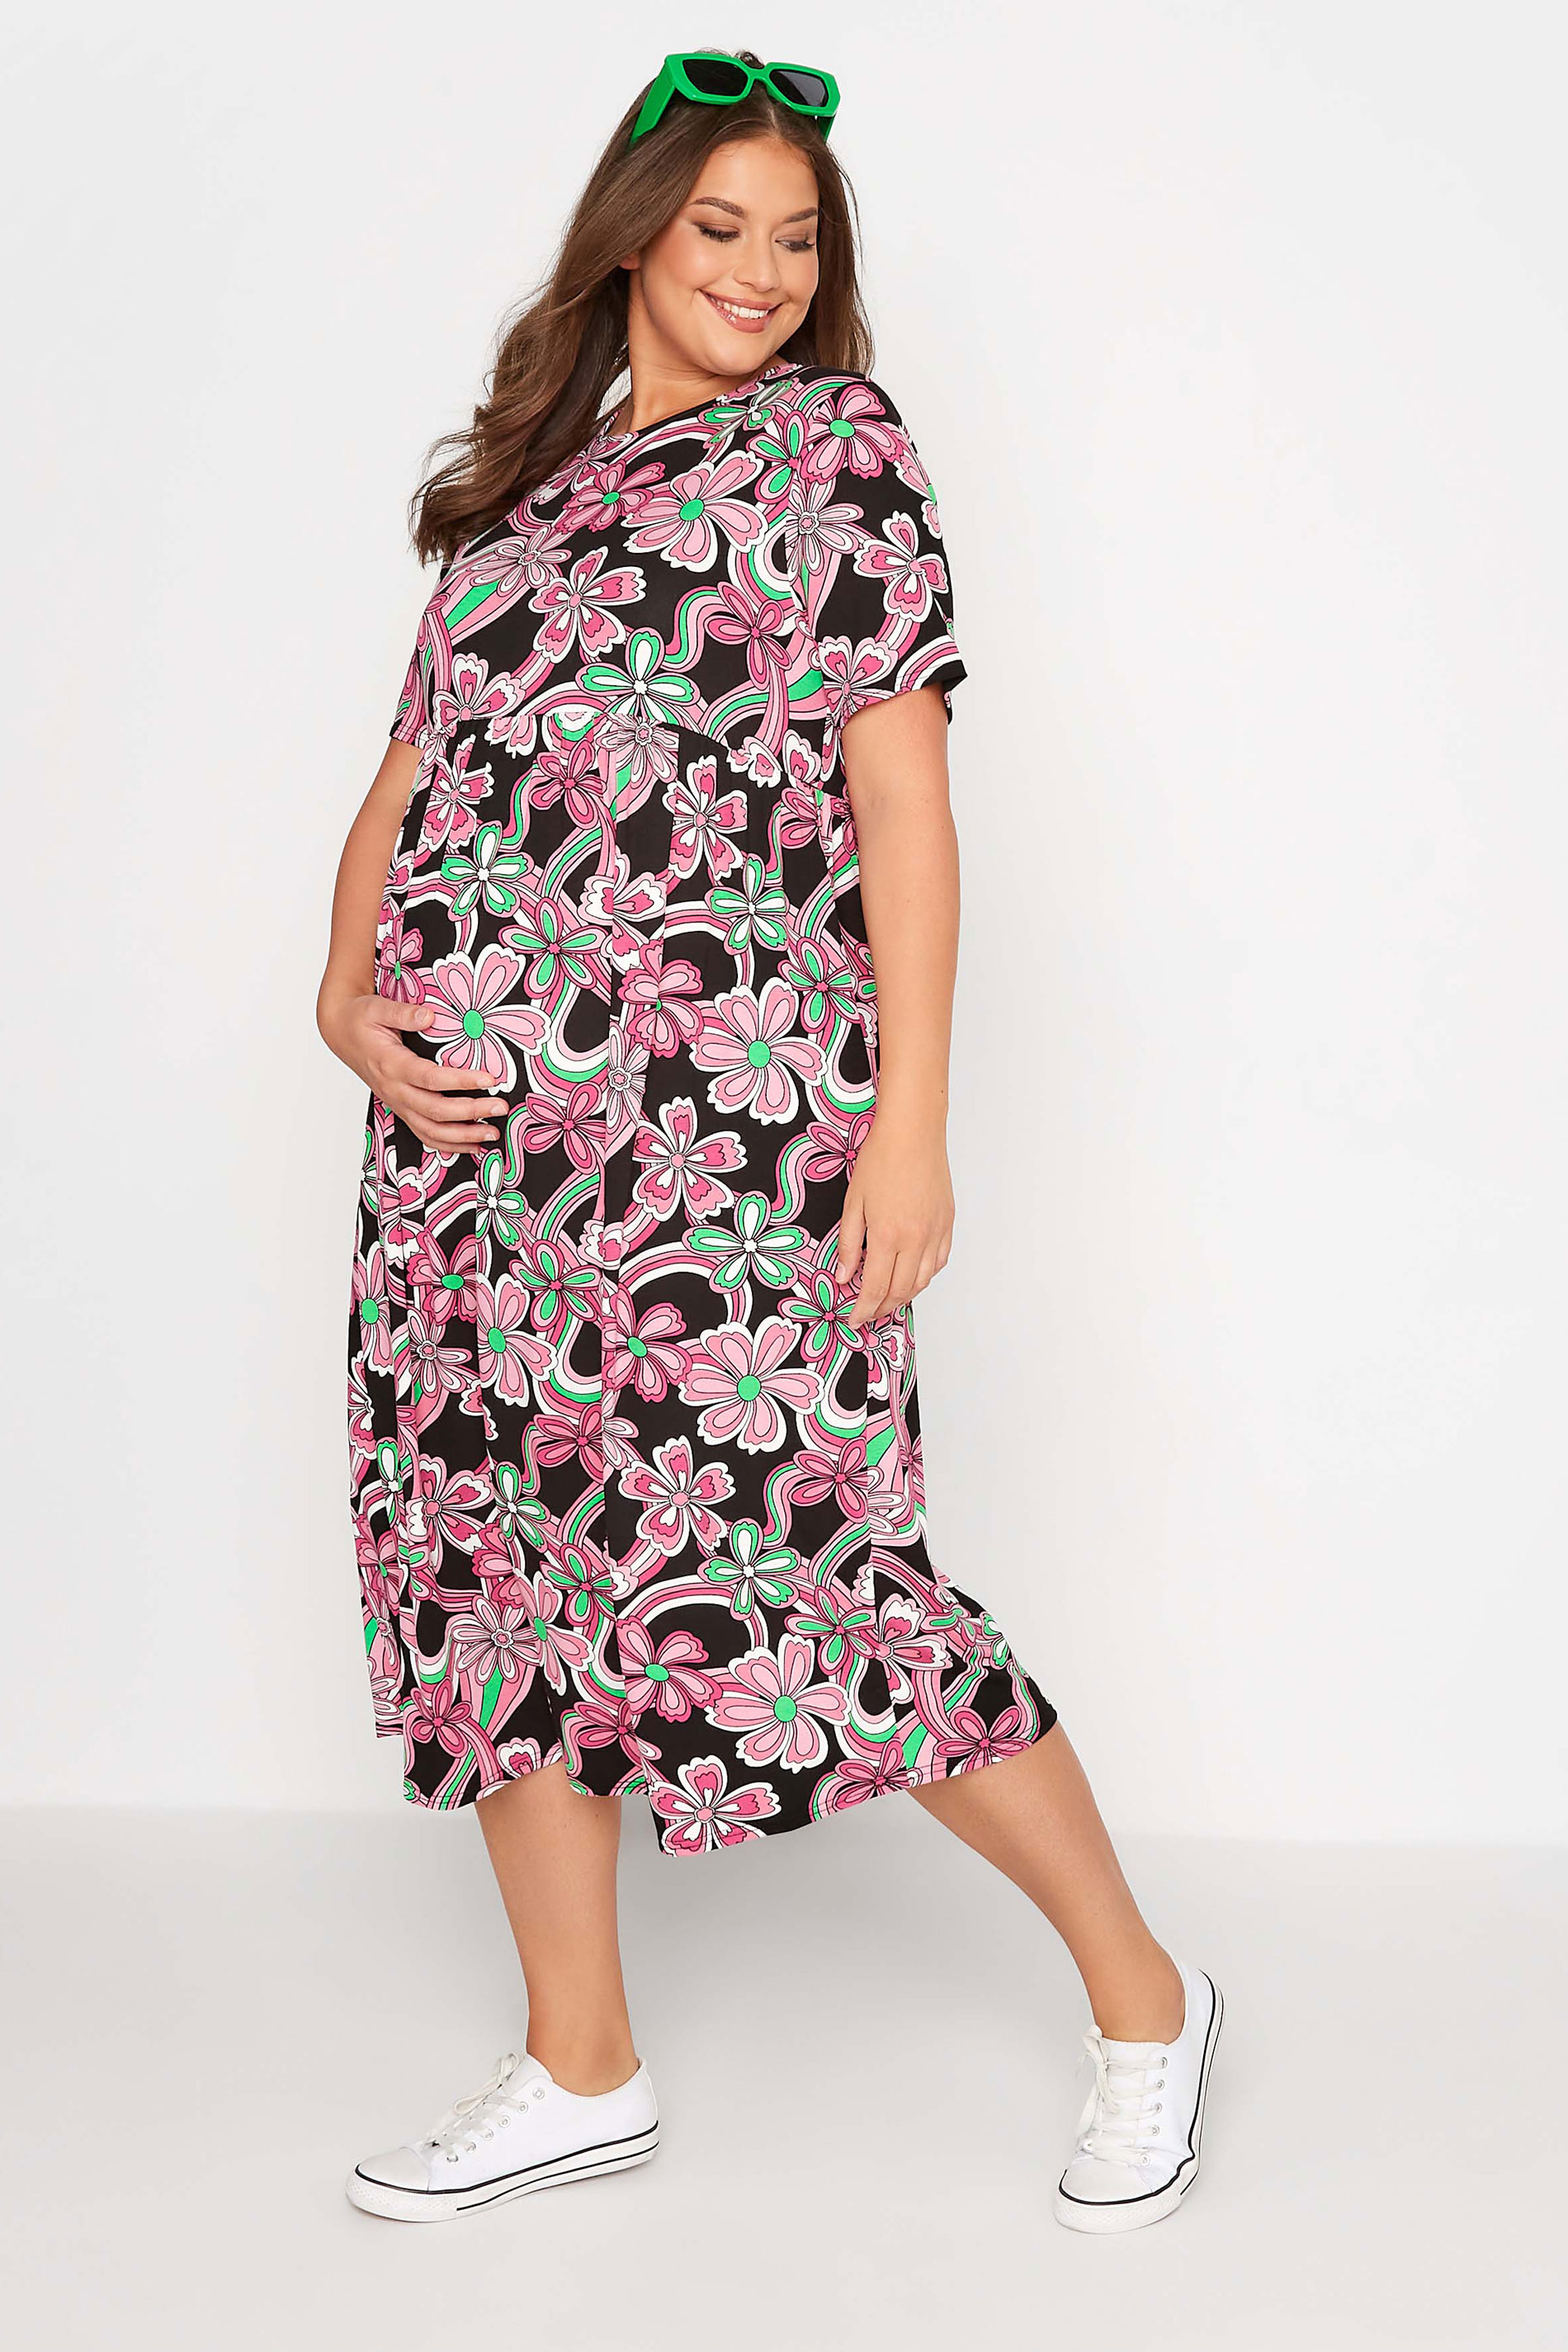 Grande taille  Vêtements de Grossesse Grande taille  Robe de grossesse | BUMP IT UP MATERNITY Curve Black Floral Pocket Dress - JY44062